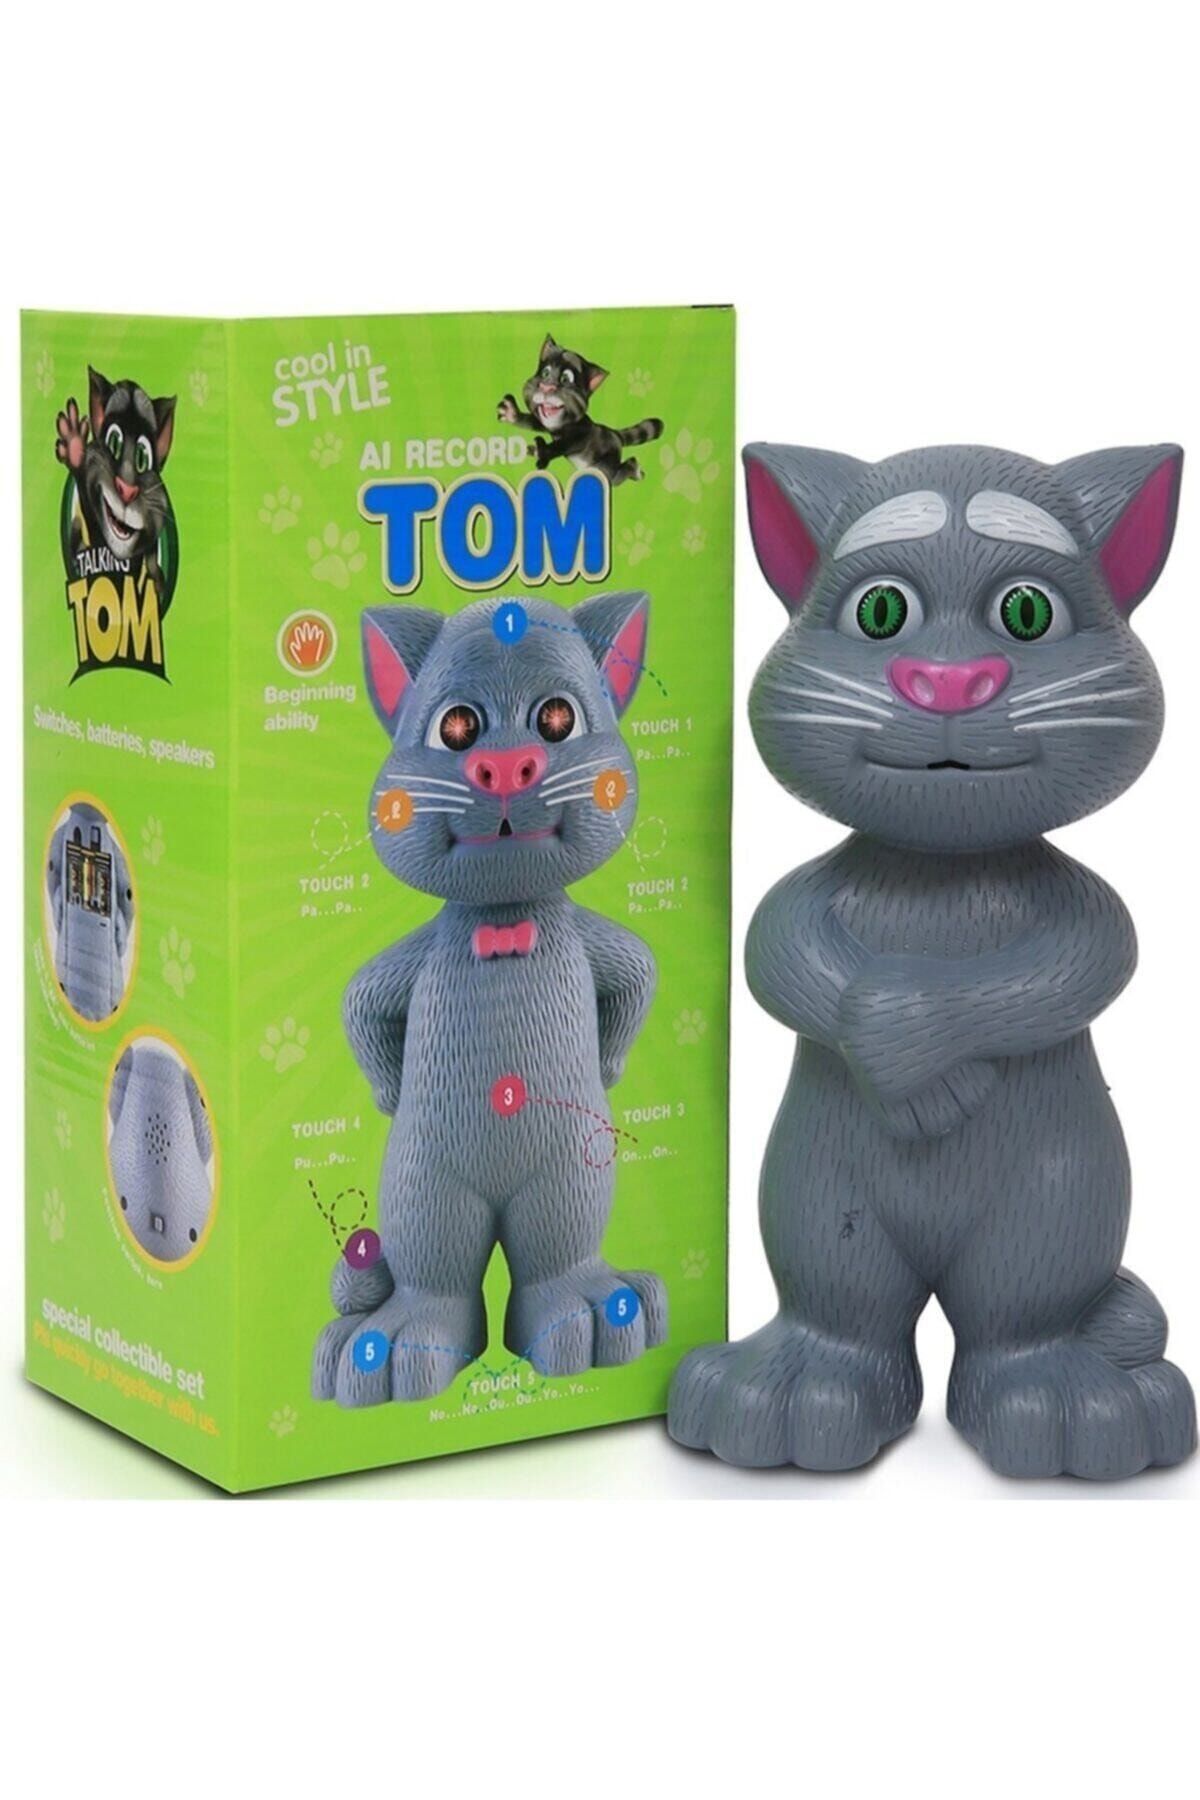 matchbang Tom Cat Konuşan Kedi Ses Taklit Eden Oyuncak